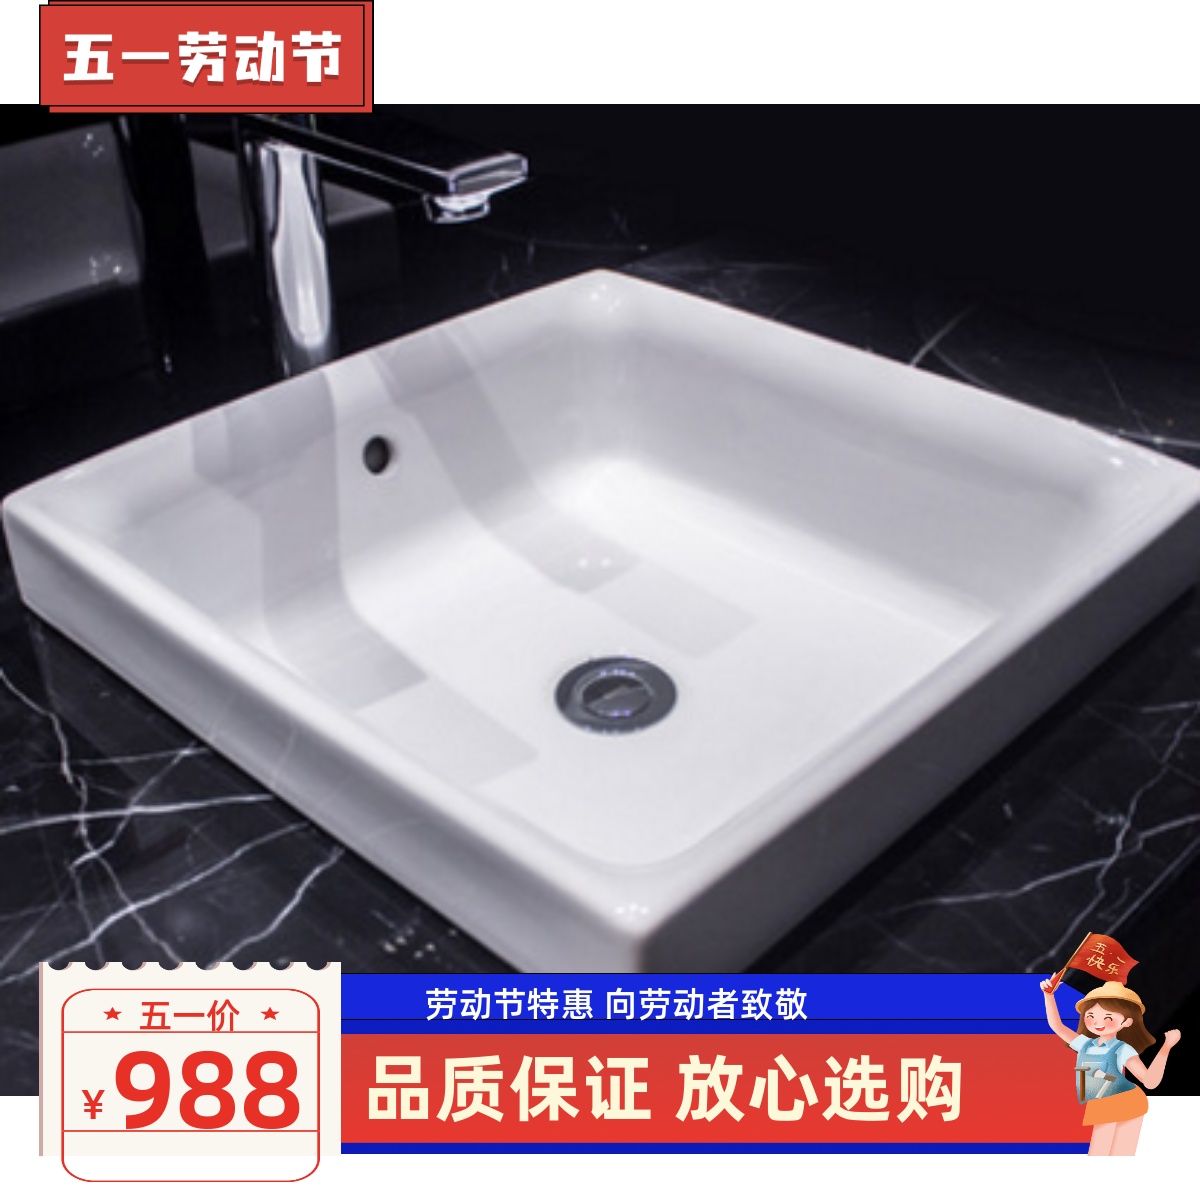 TOTO洁具卫浴 洗面器  桌上式洗面器 LW1714B